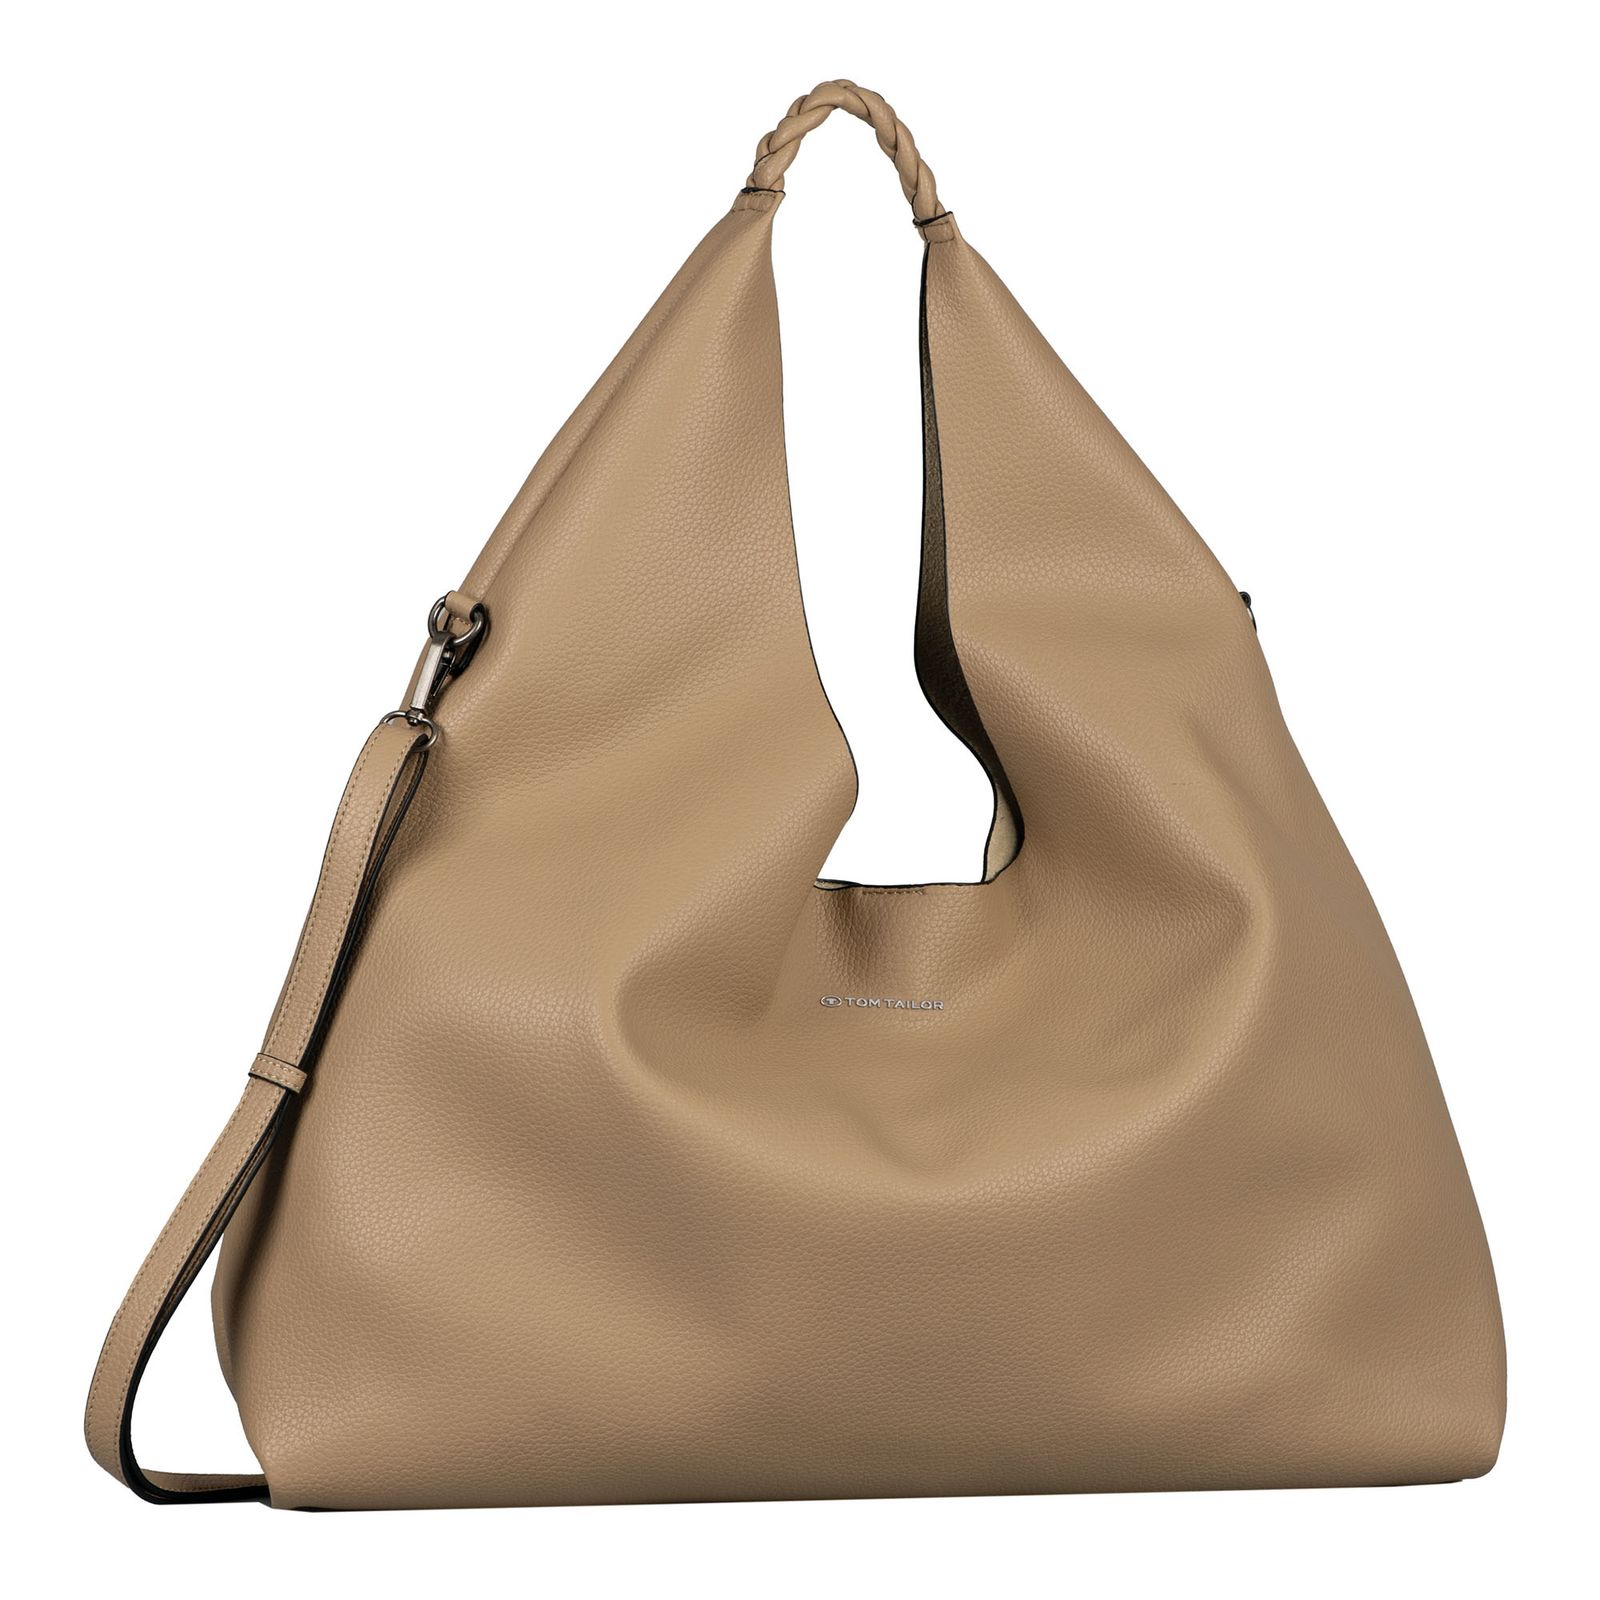 & | bags, accessories TAILOR bag online modeherz Finna | purses Bag Buy Hobo shoulder TOM Taupe